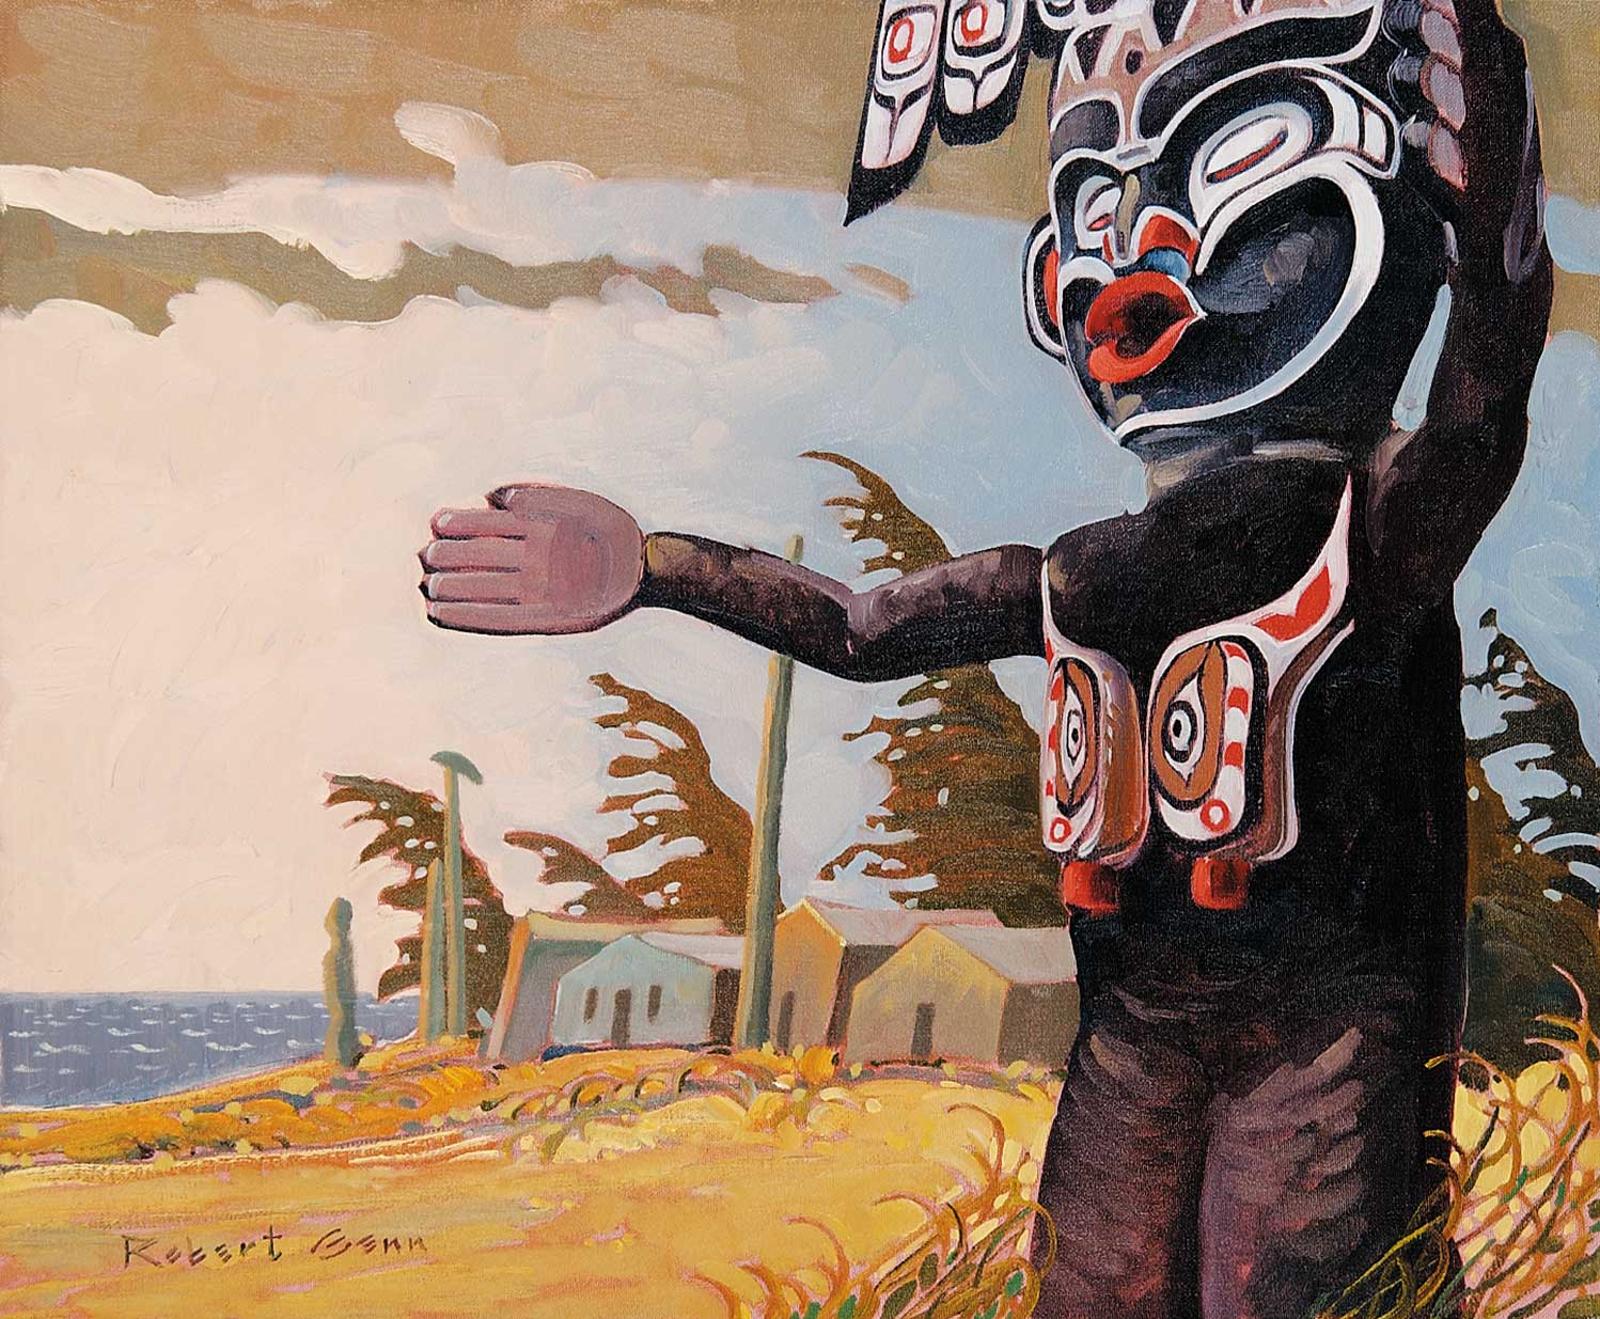 Robert Douglas Genn (1936-2014) - Tsonoqua Causing the Wind